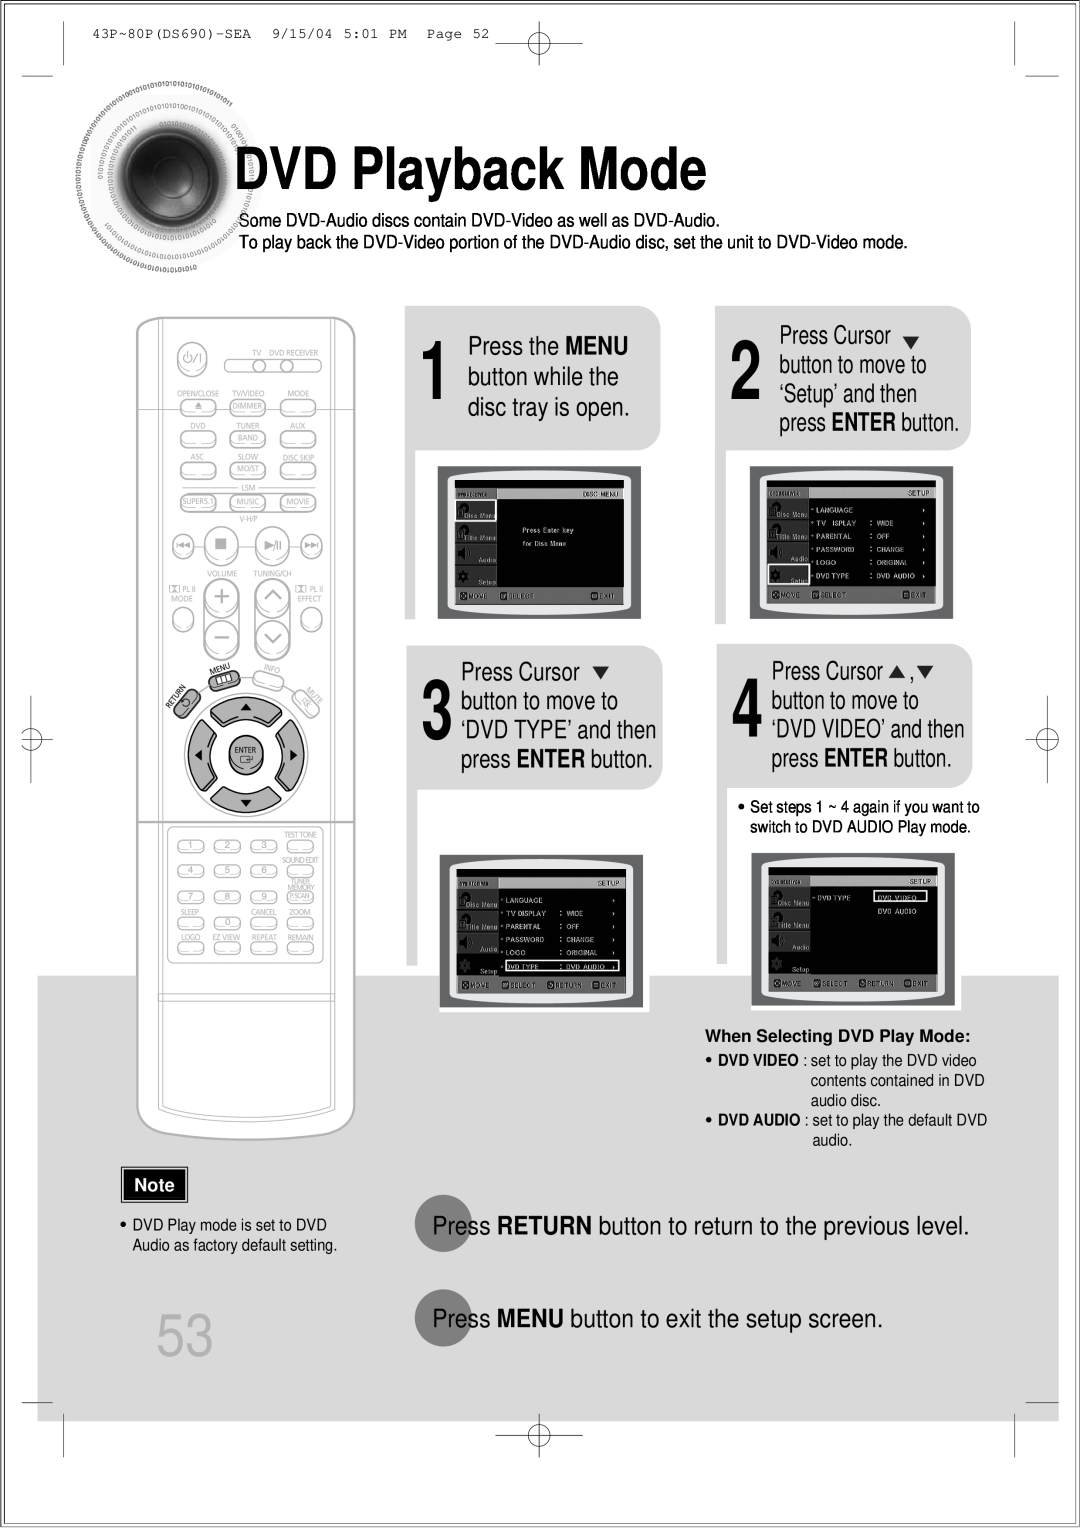 Samsung HT-DS690 DVDPlayback Mode, Press the MENU, press ENTER button, Press MENU button to exit the setup screen 